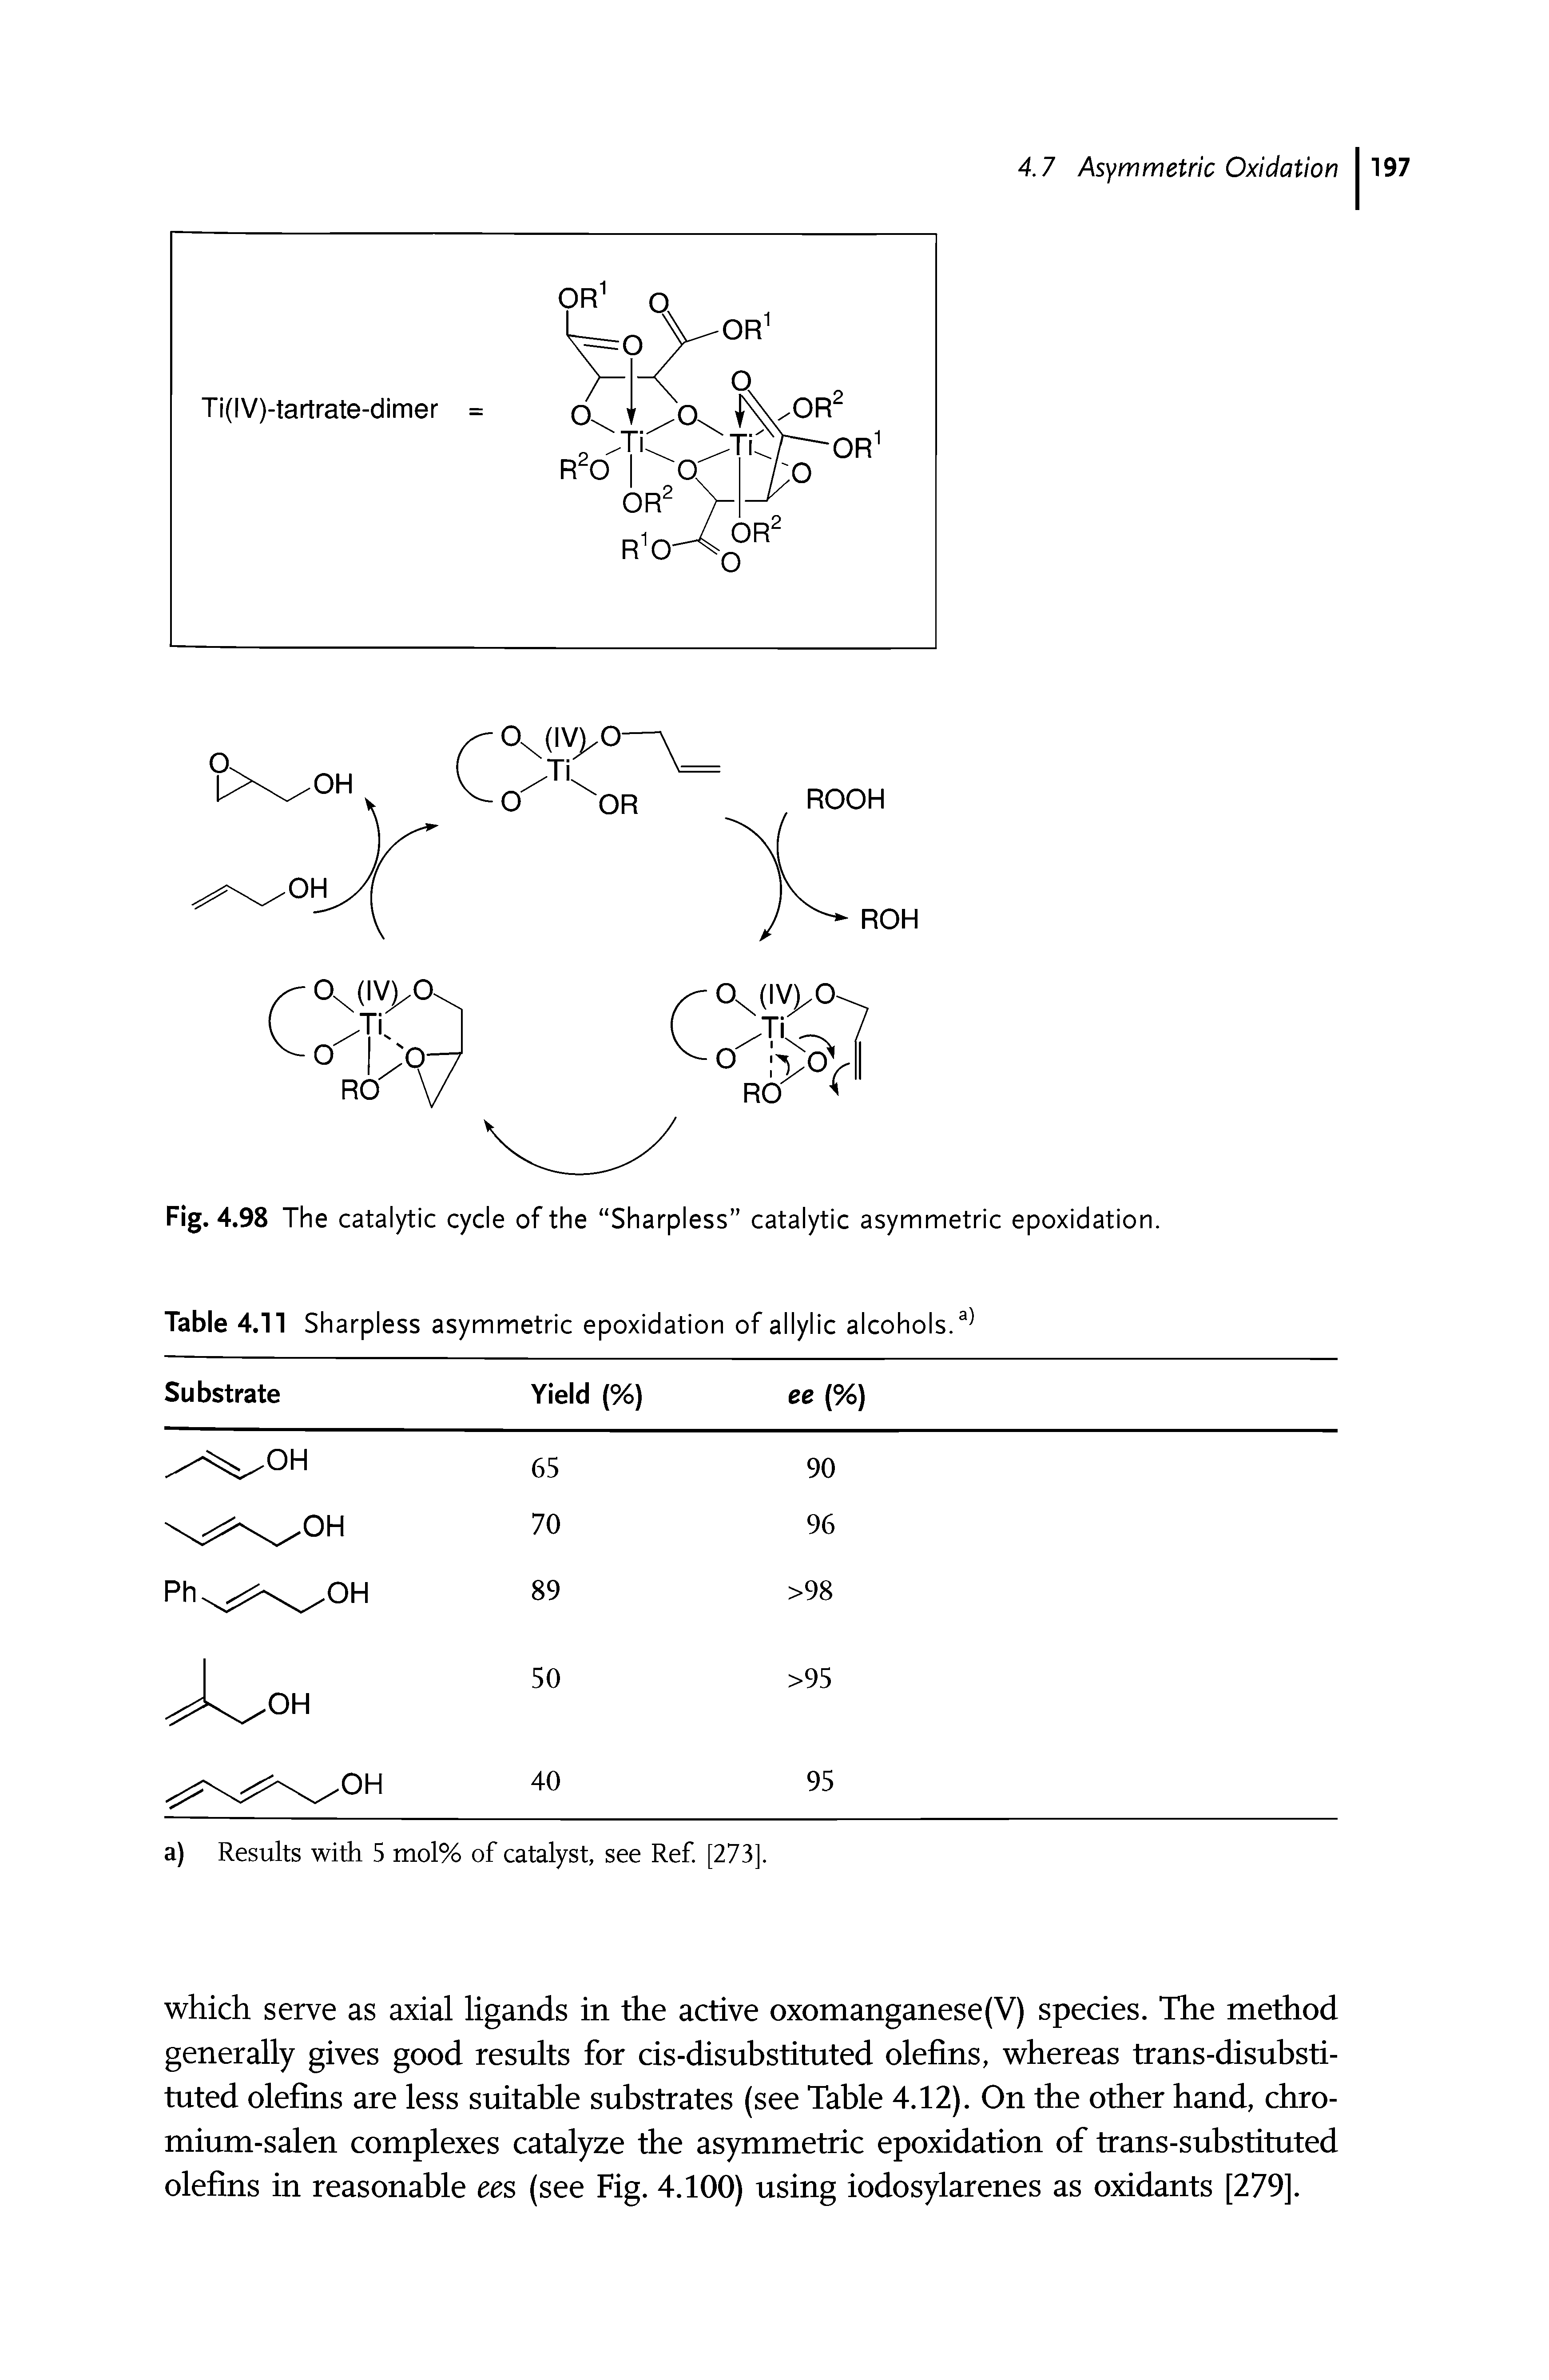 Table 4.11 Sharpless asymmetric epoxidation of allylic alcohols.a)...